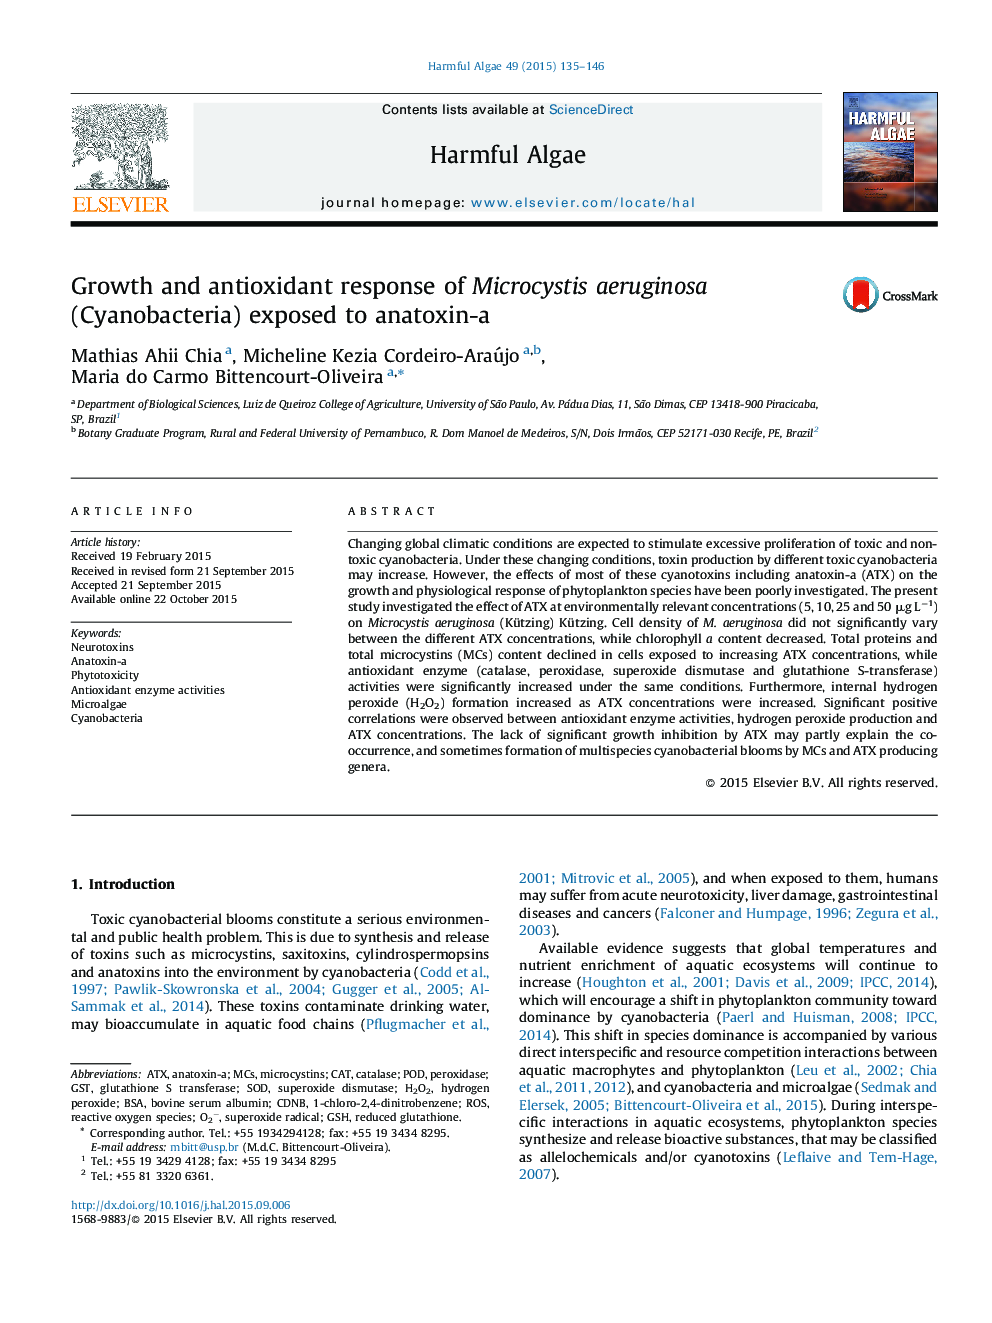 Growth and antioxidant response of Microcystis aeruginosa (Cyanobacteria) exposed to anatoxin-a